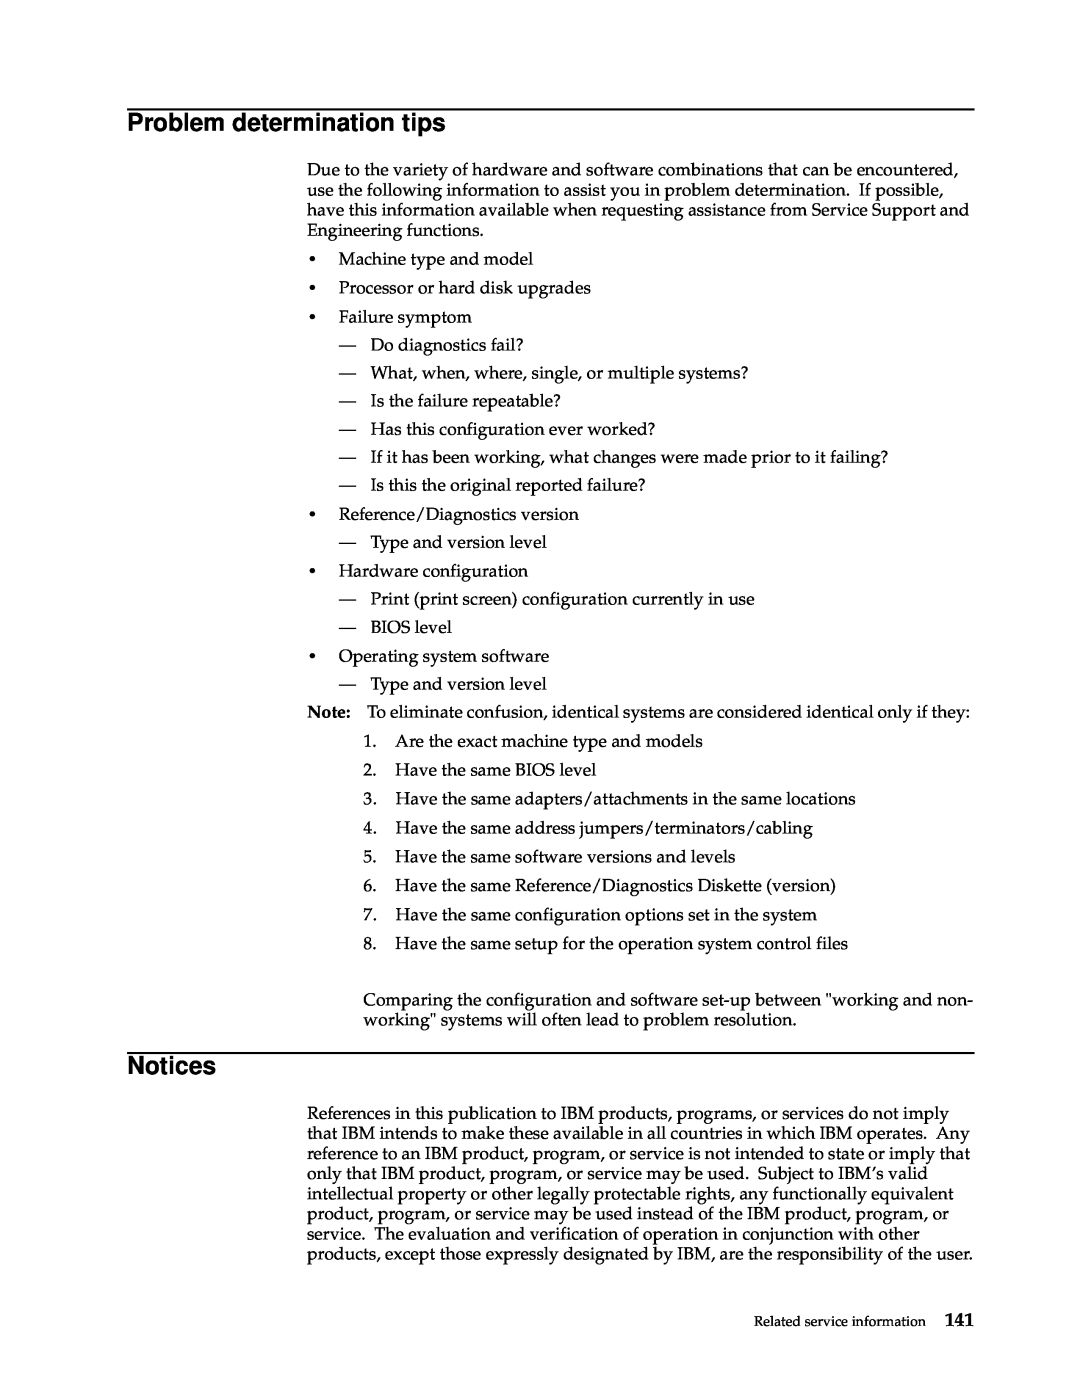 IBM x Series 200 manual Problem determination tips, Notices 